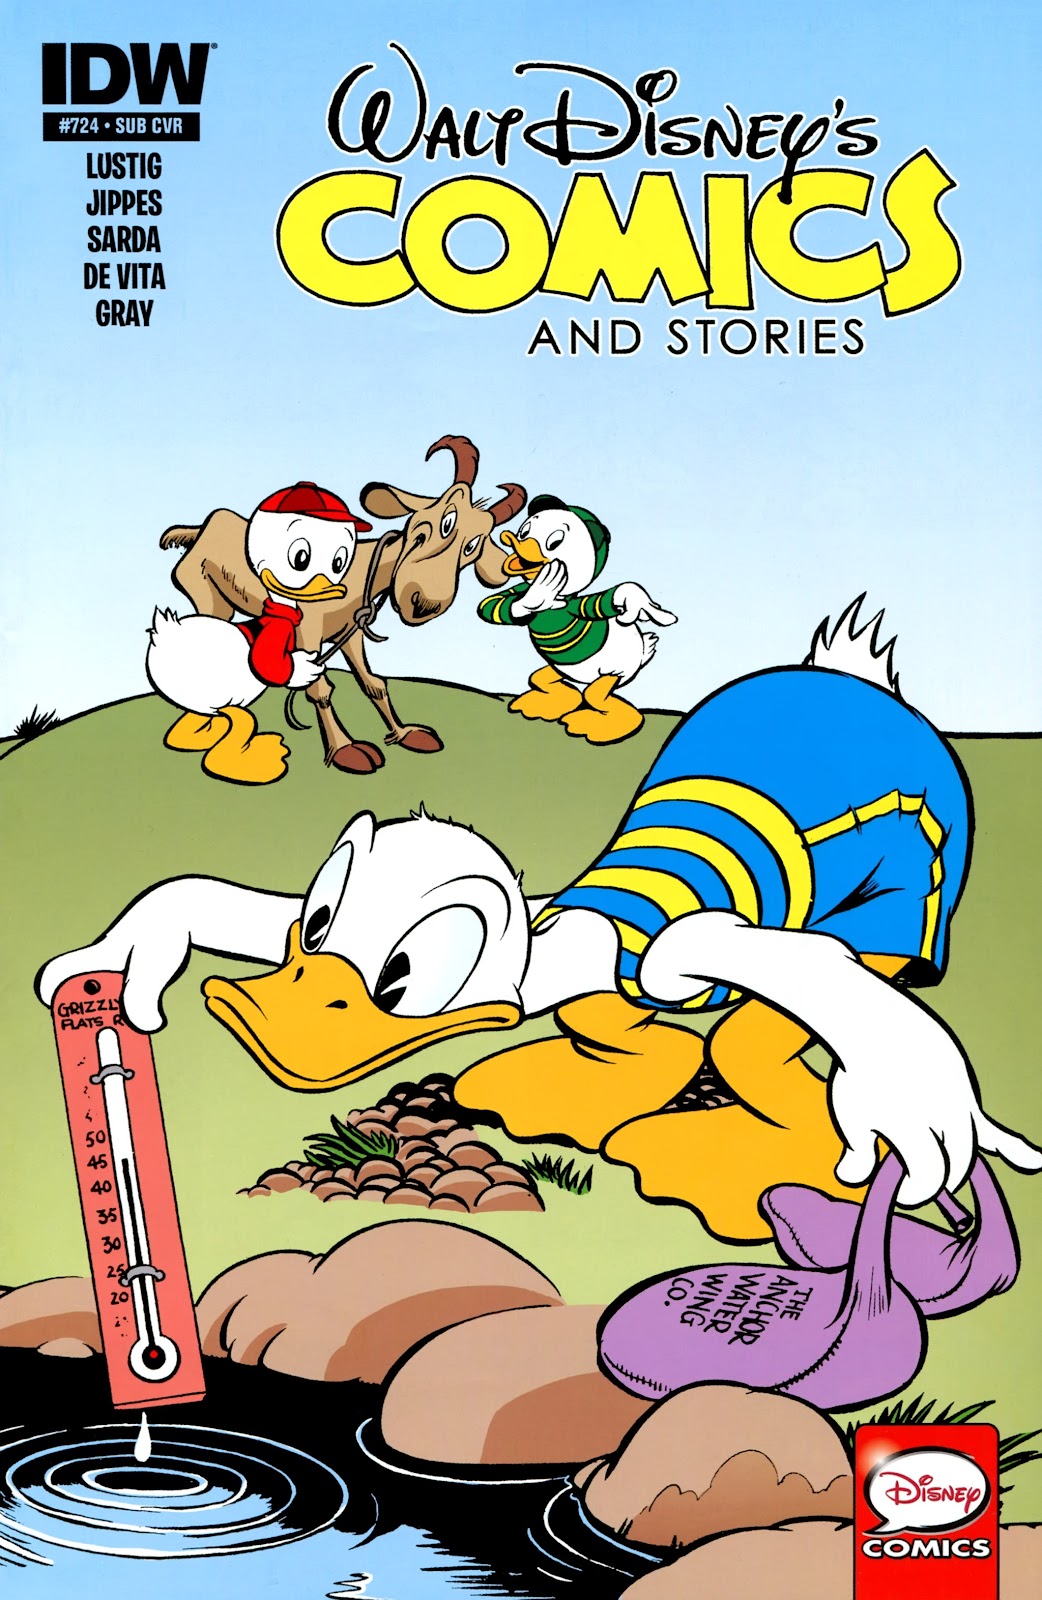 Walt Disneys Comics and Stories 724 Page 1